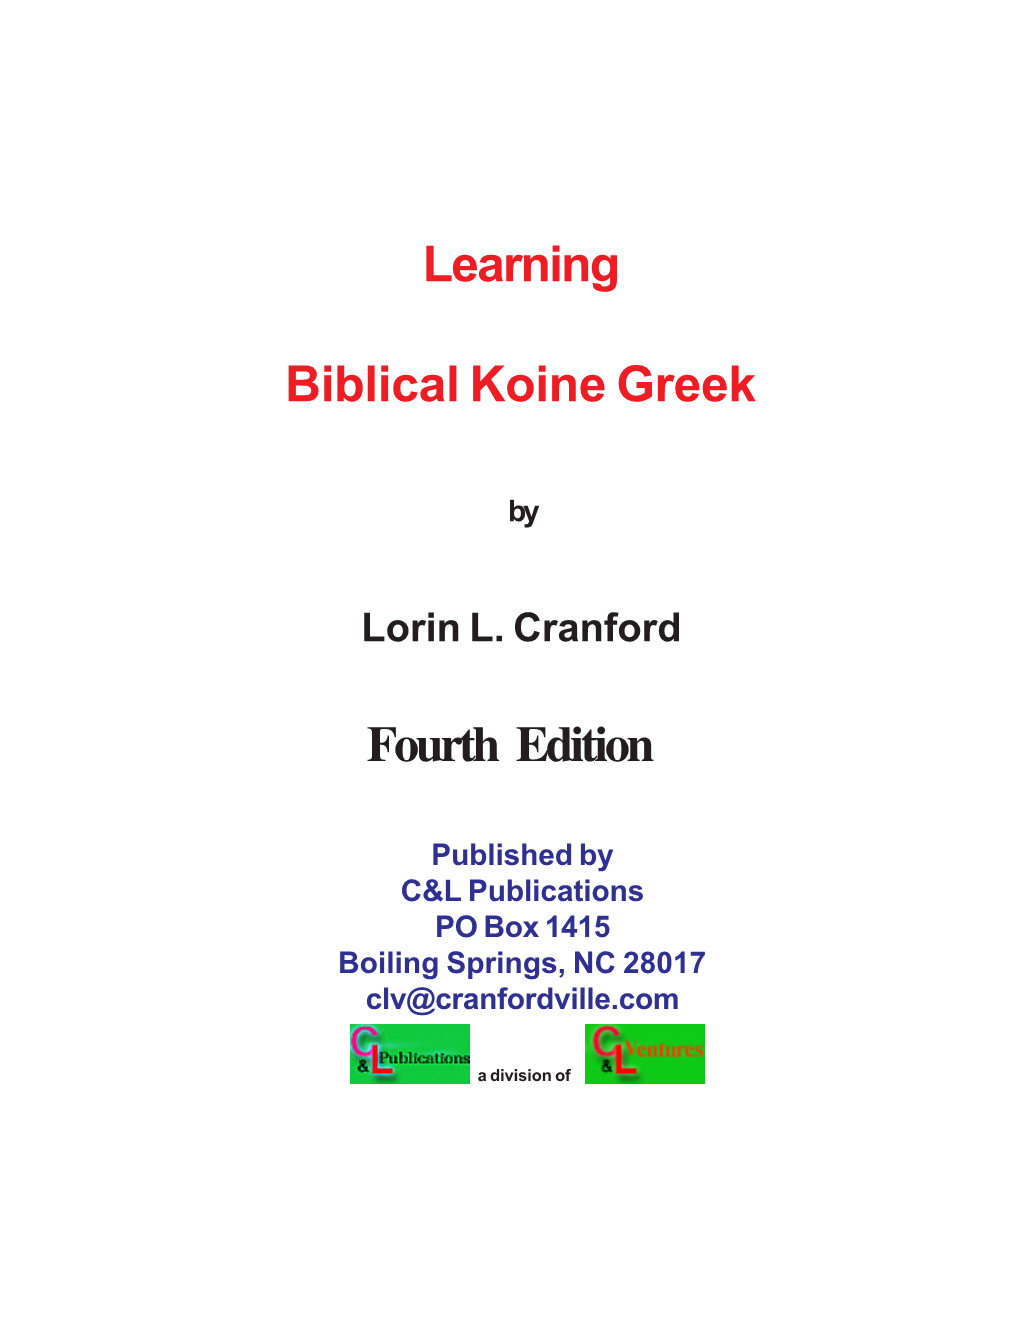 Learning Biblical Koine Greek Fourth Edition